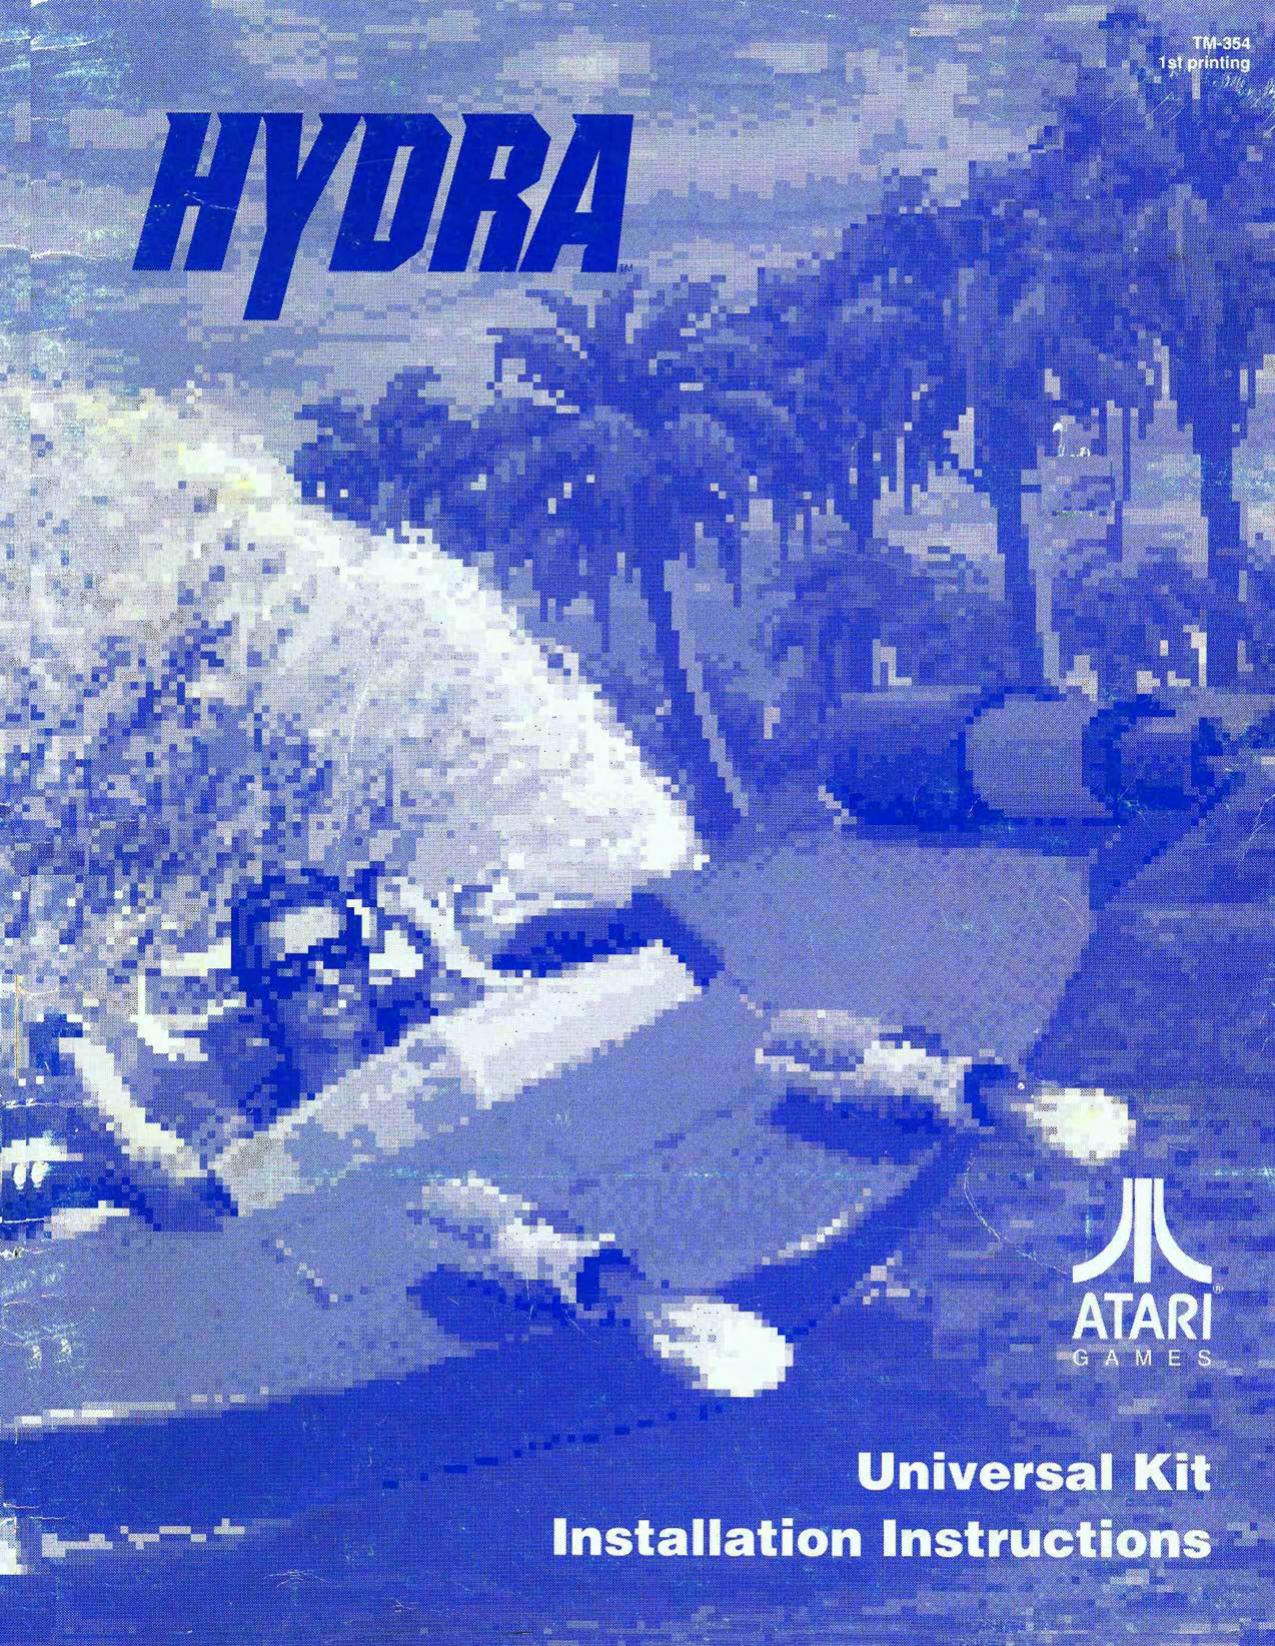 Hydra Universal Kit TM-354 1st Printing